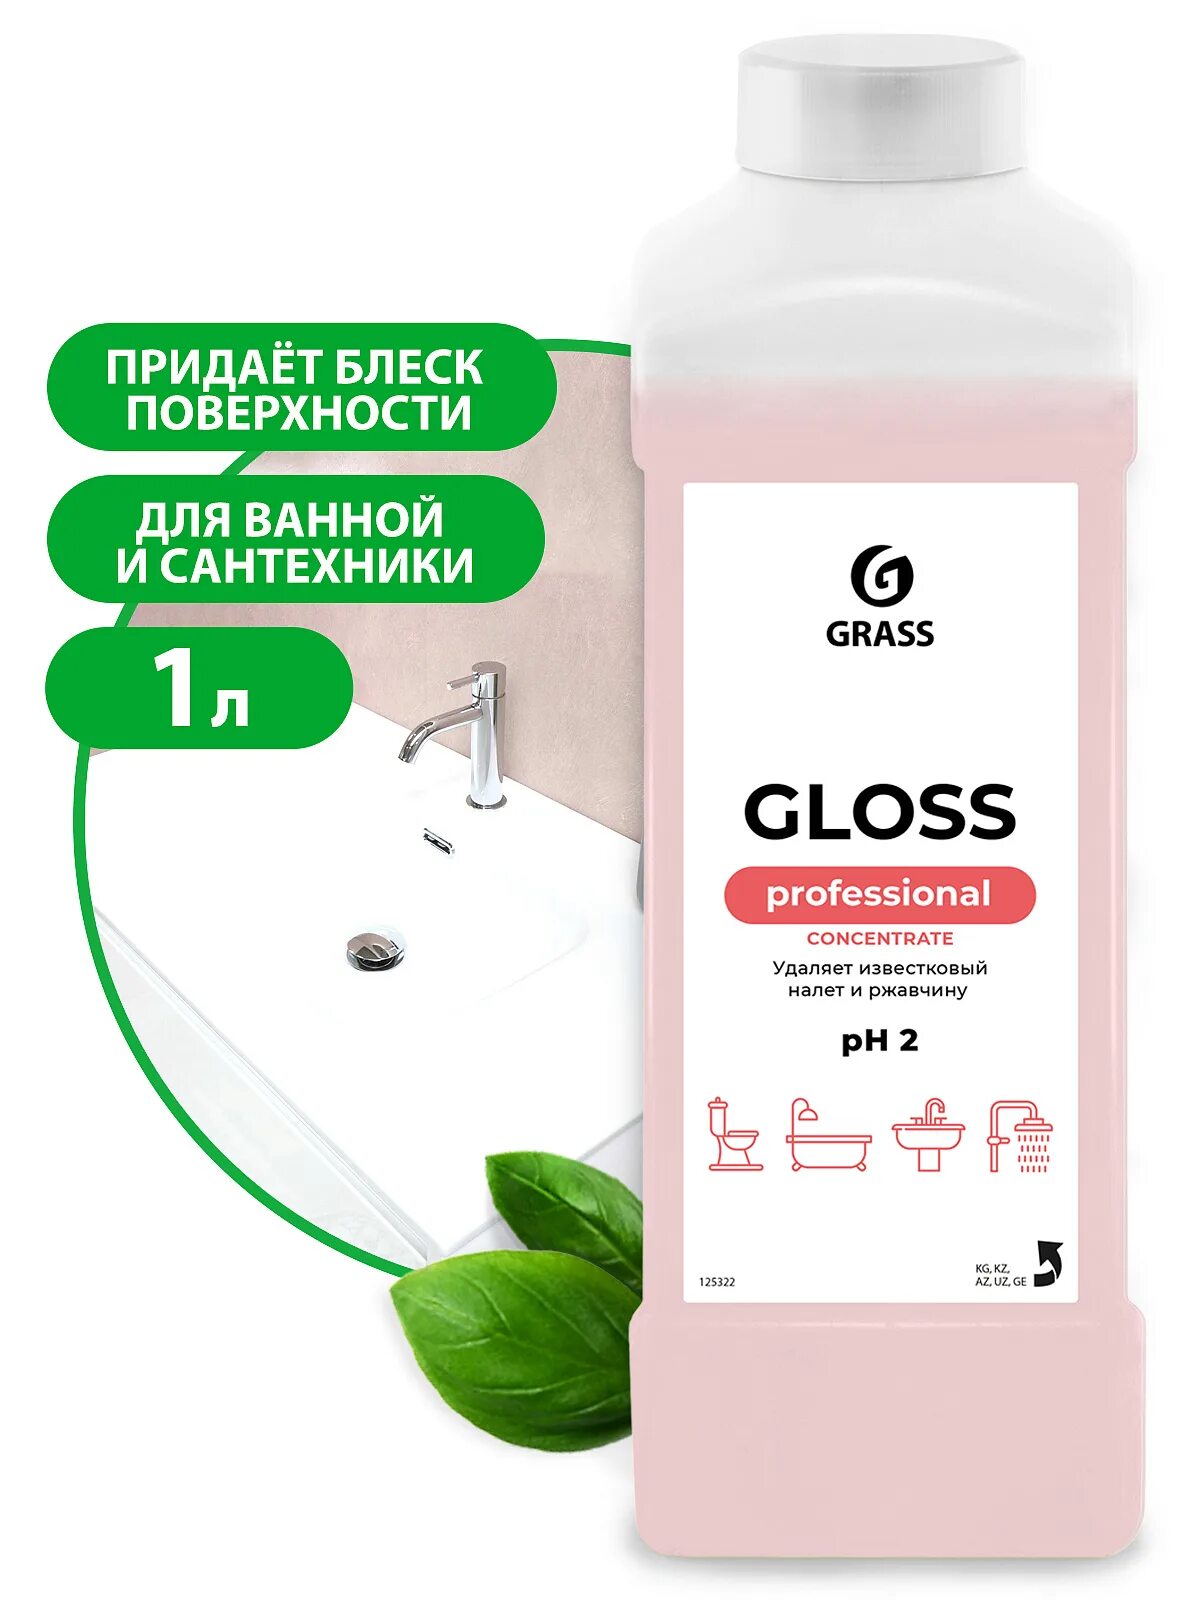 Gloss концентрат Грасс. Средство чистящее концентрированное Gloss-Concentrate (1л) grass. Средство чистящее концентрированное Gloss Concentrate 1л.. Концентрированное чистящее средство "Gloss Concentrate"125322,.